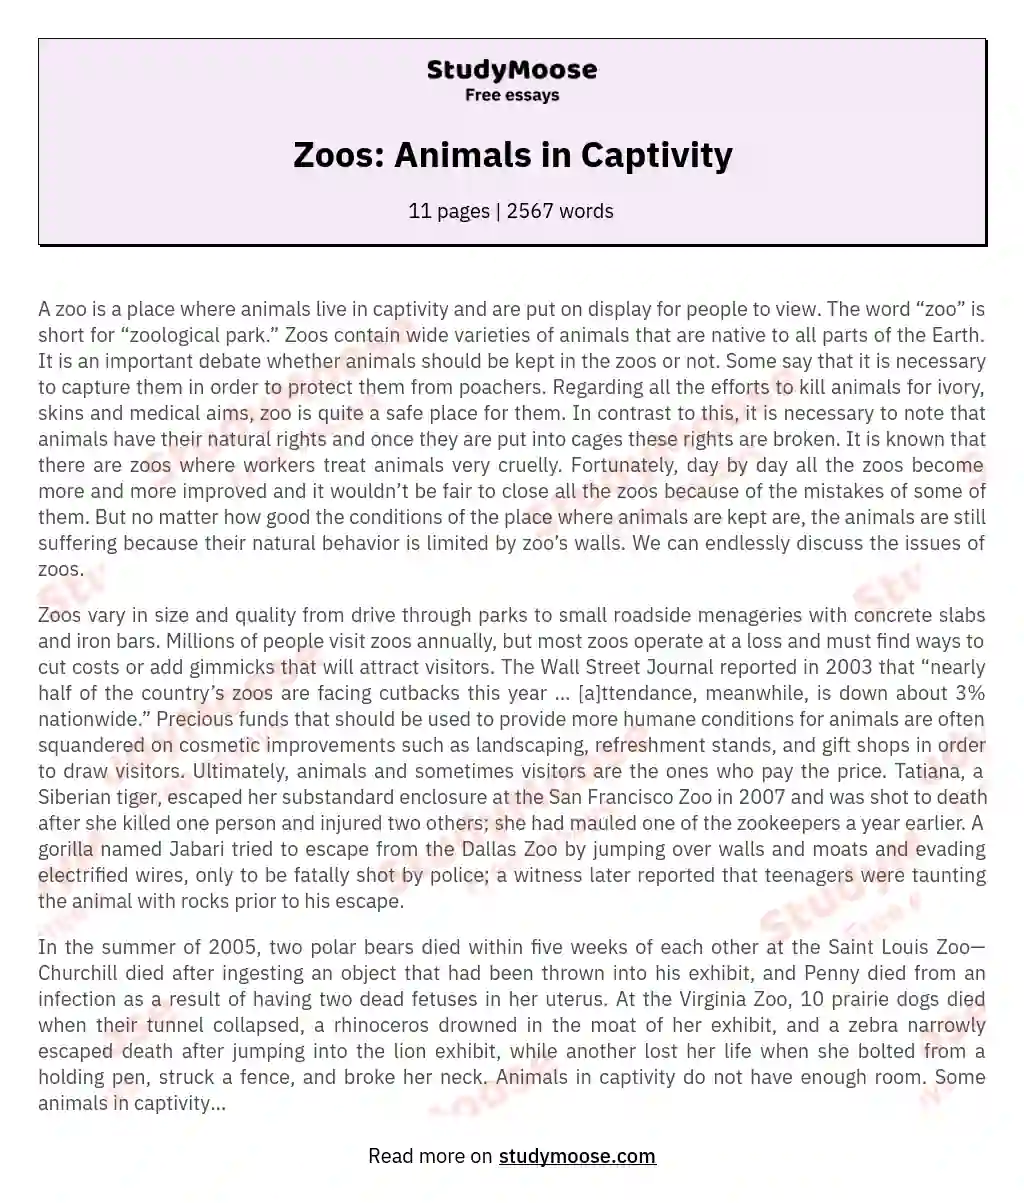 Zoos: Animals in Captivity Free Essay Example